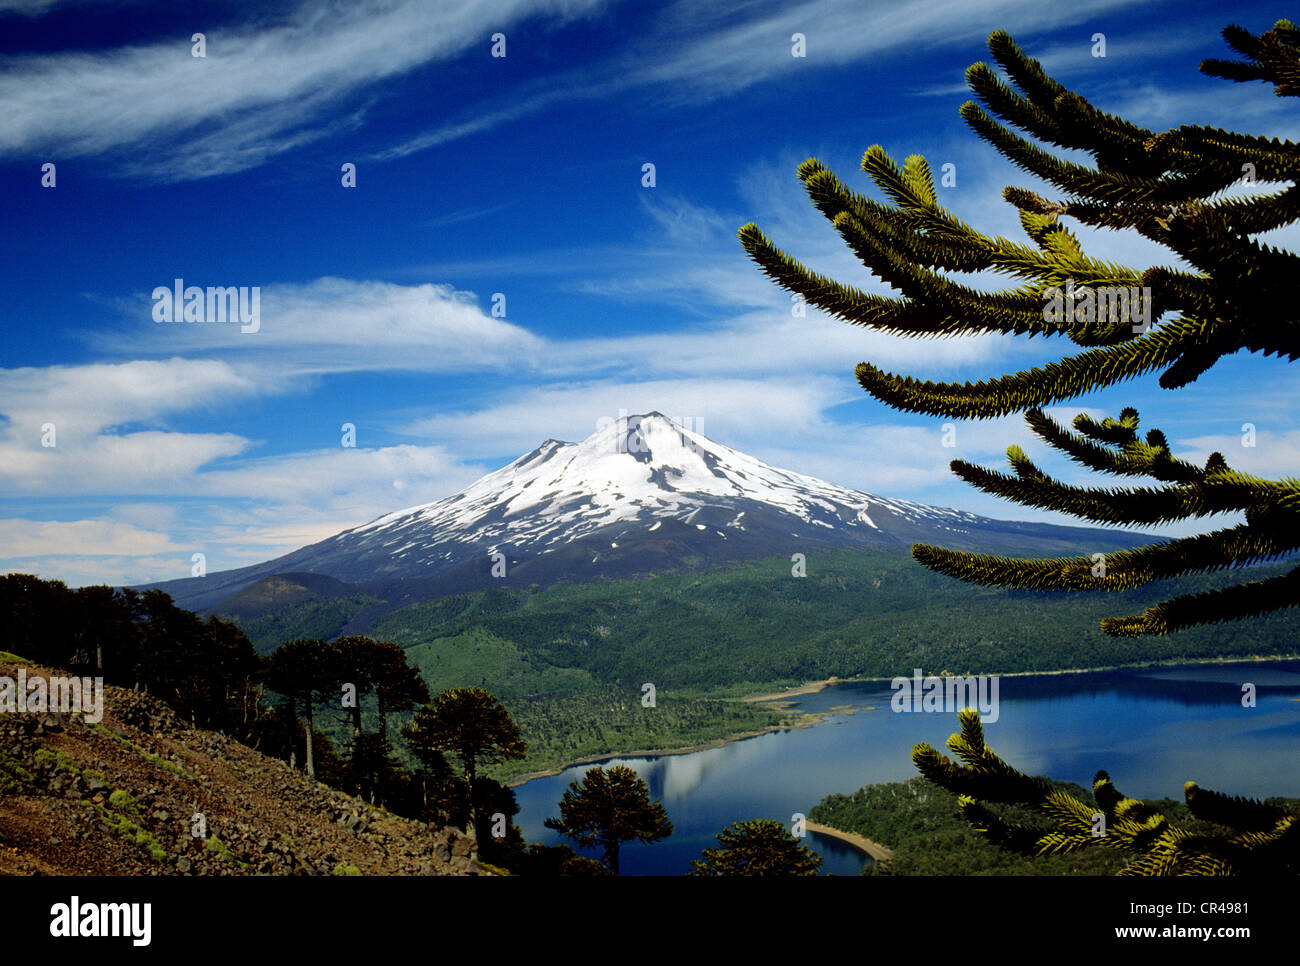 Chile, Los Lagos region, Araucania Province, Conguillio National Park, Llaima volcano, Conguillio lake and Araucaria forest Stock Photo